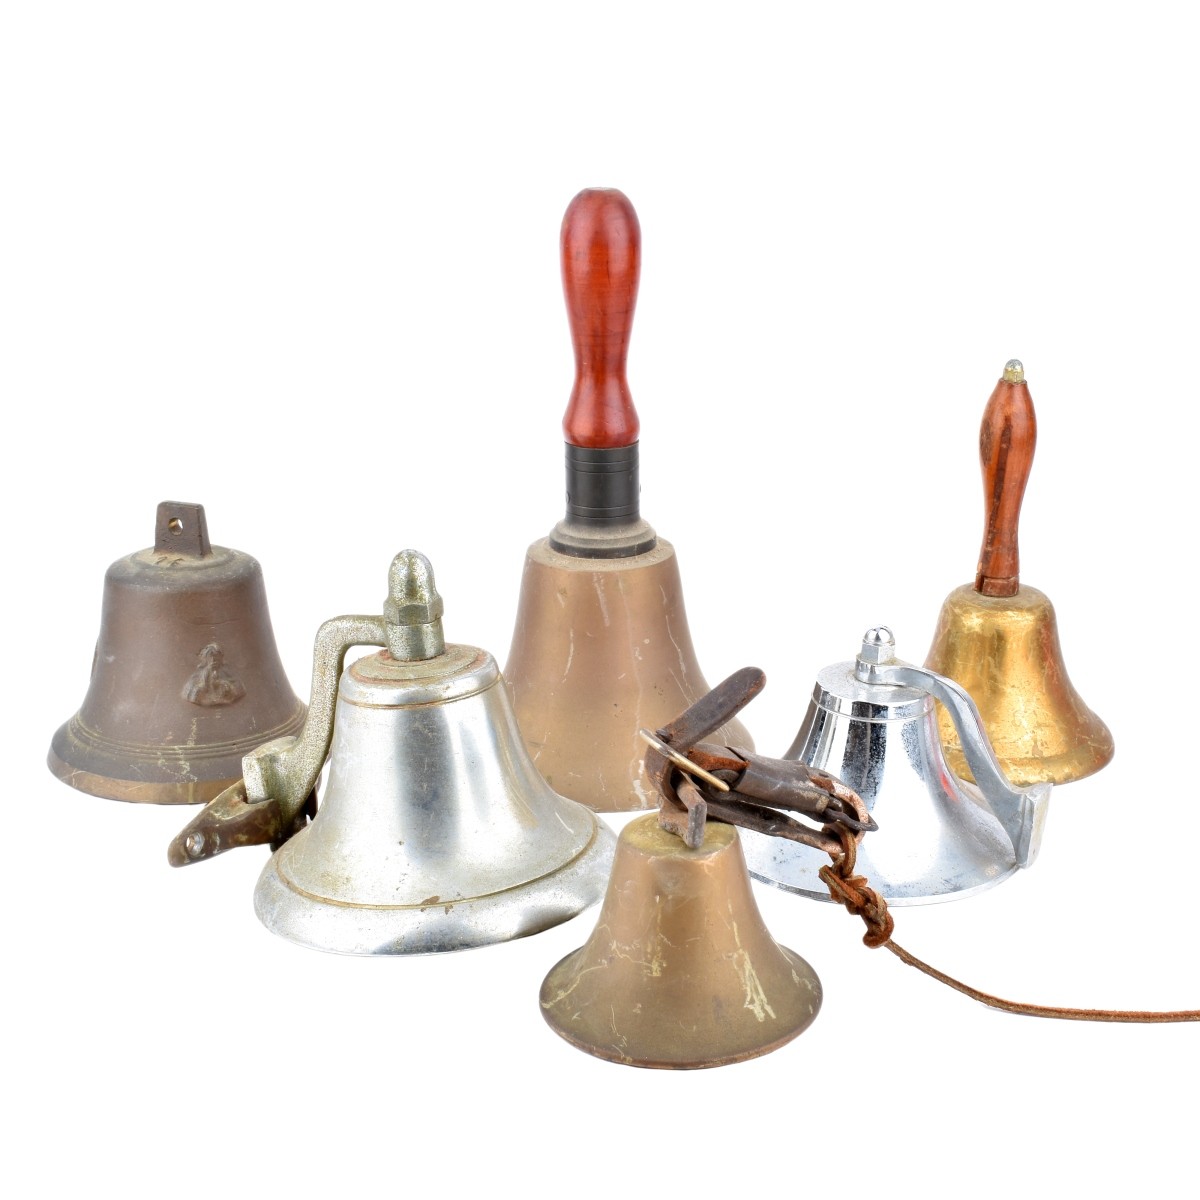 Vintage Brass Bells